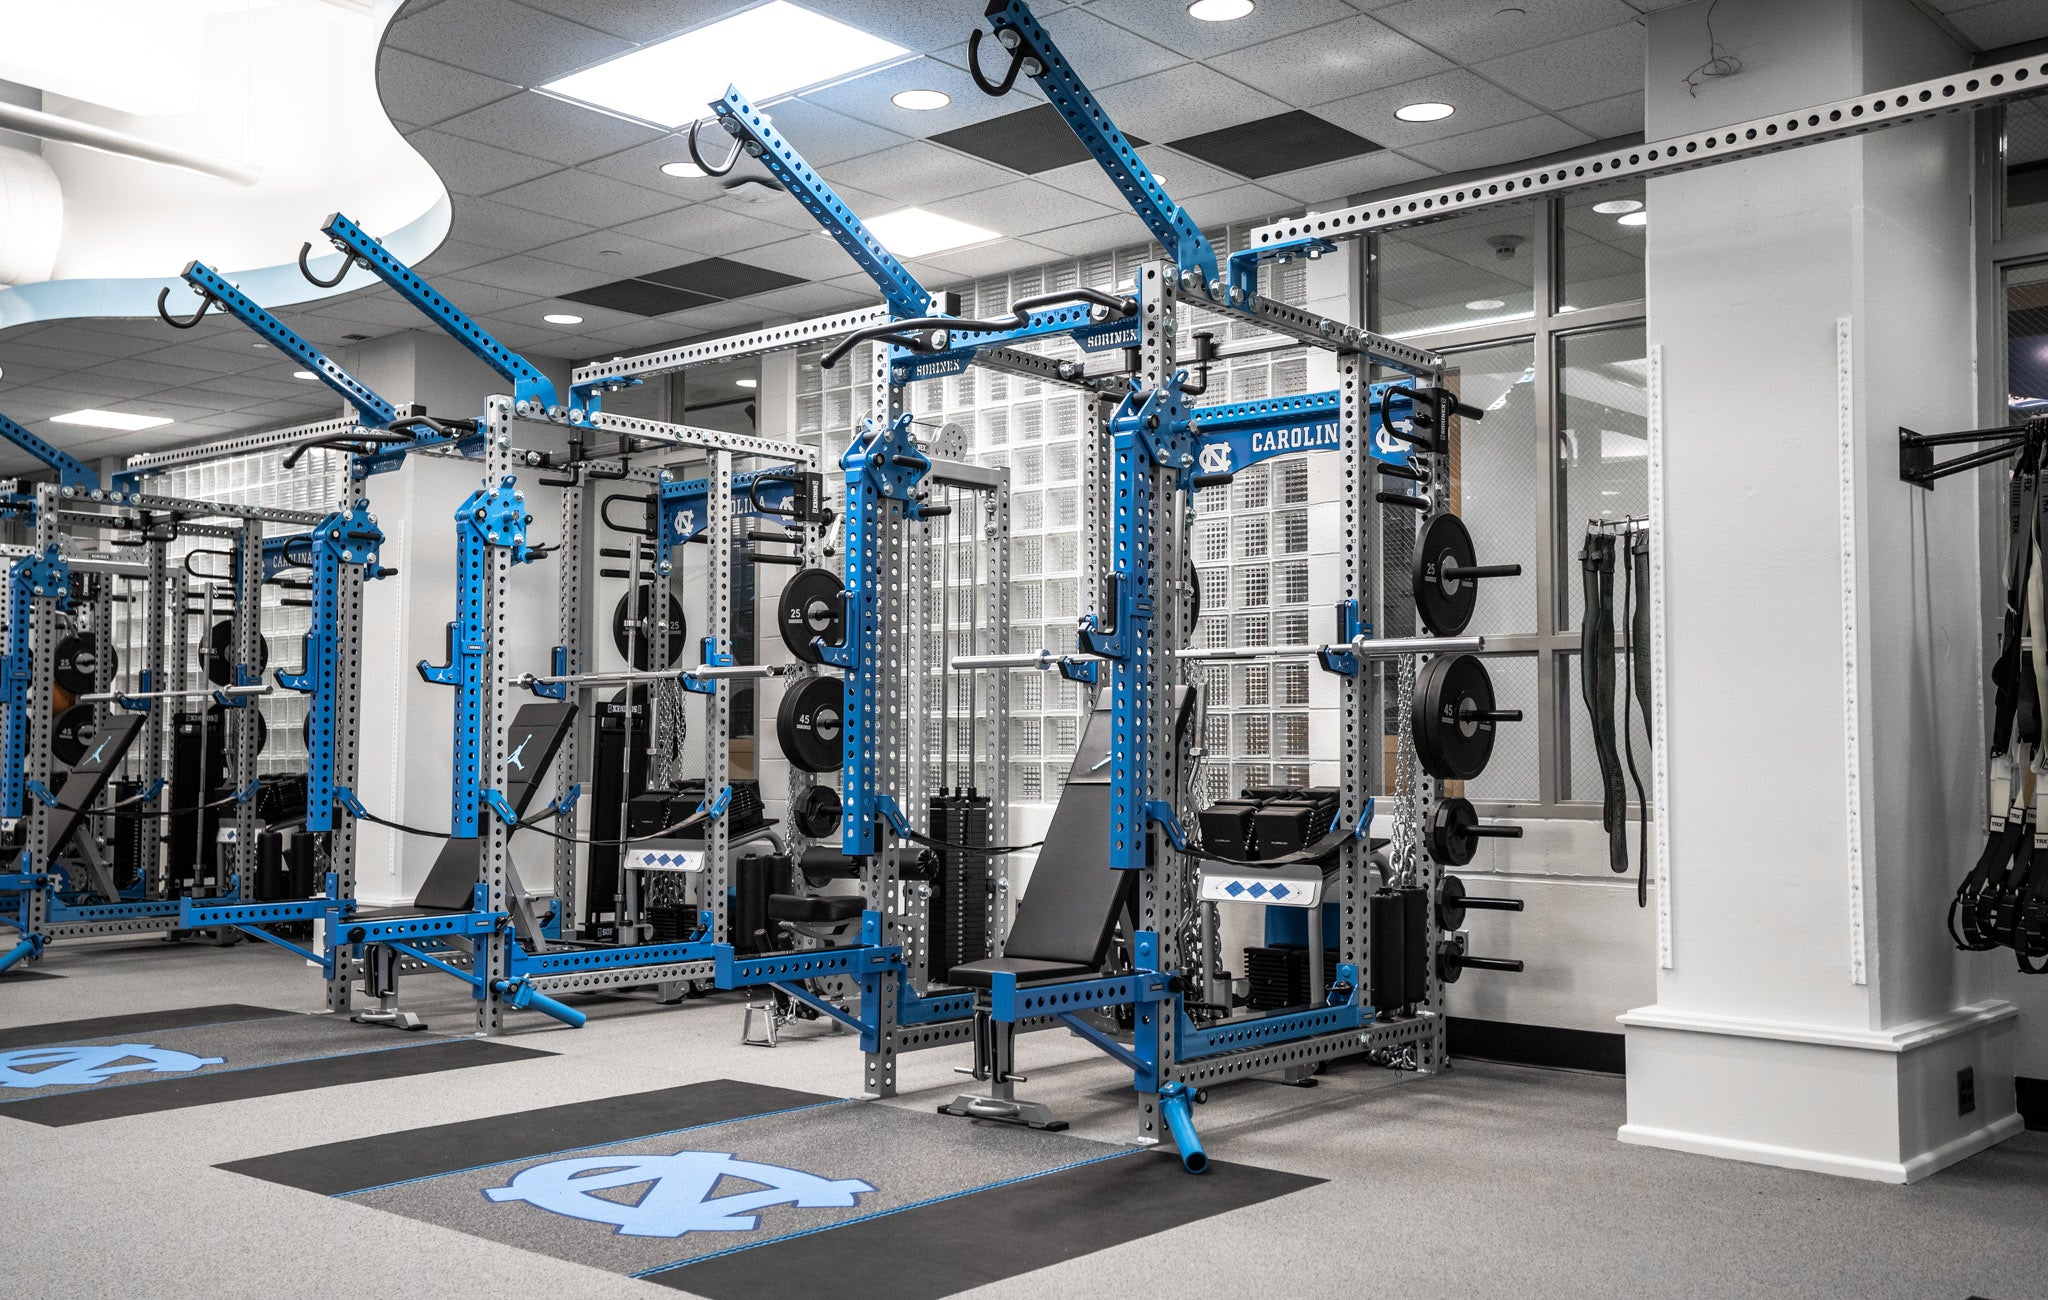 University of North Carolina strength and conditioning